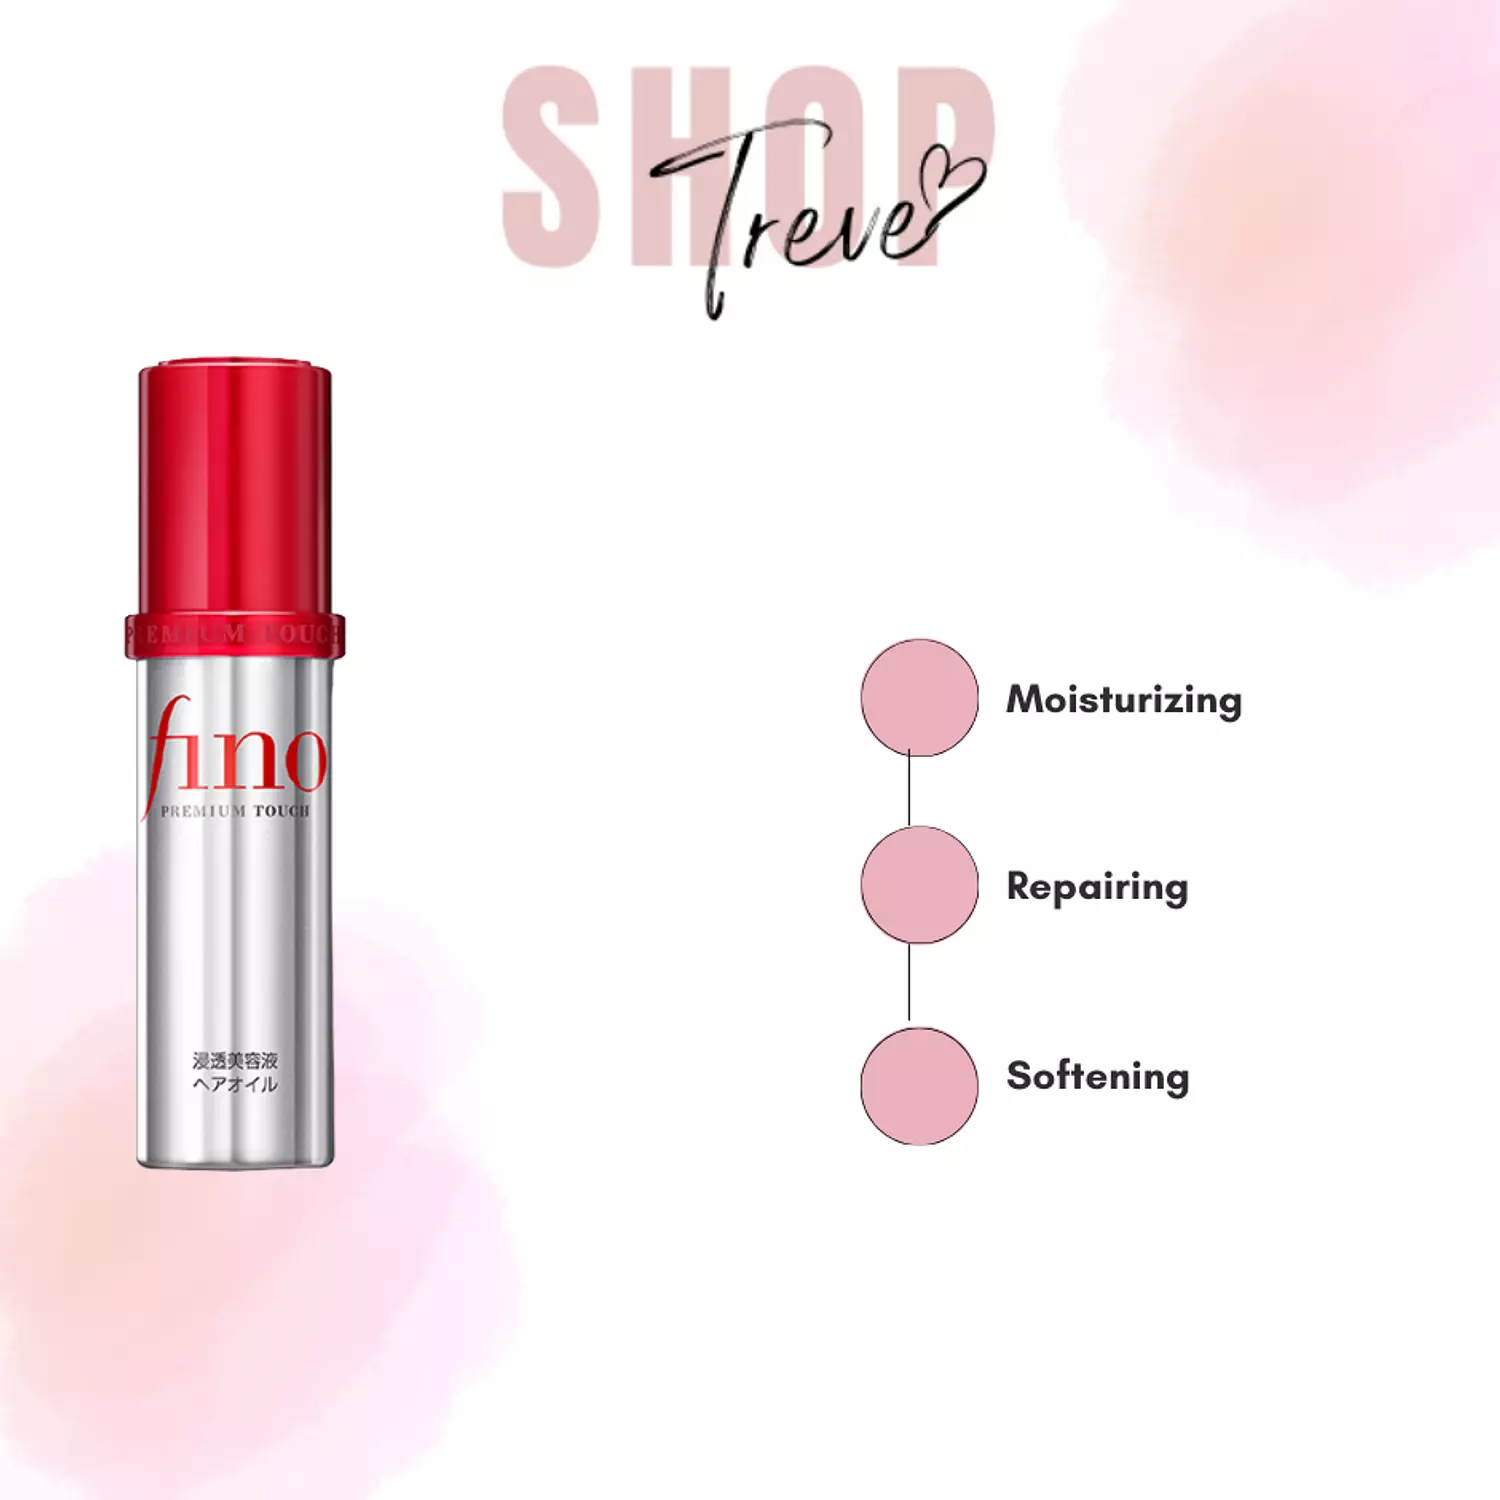 Shiseido - Fino Premium Touch Hair Oil 70ml hover image